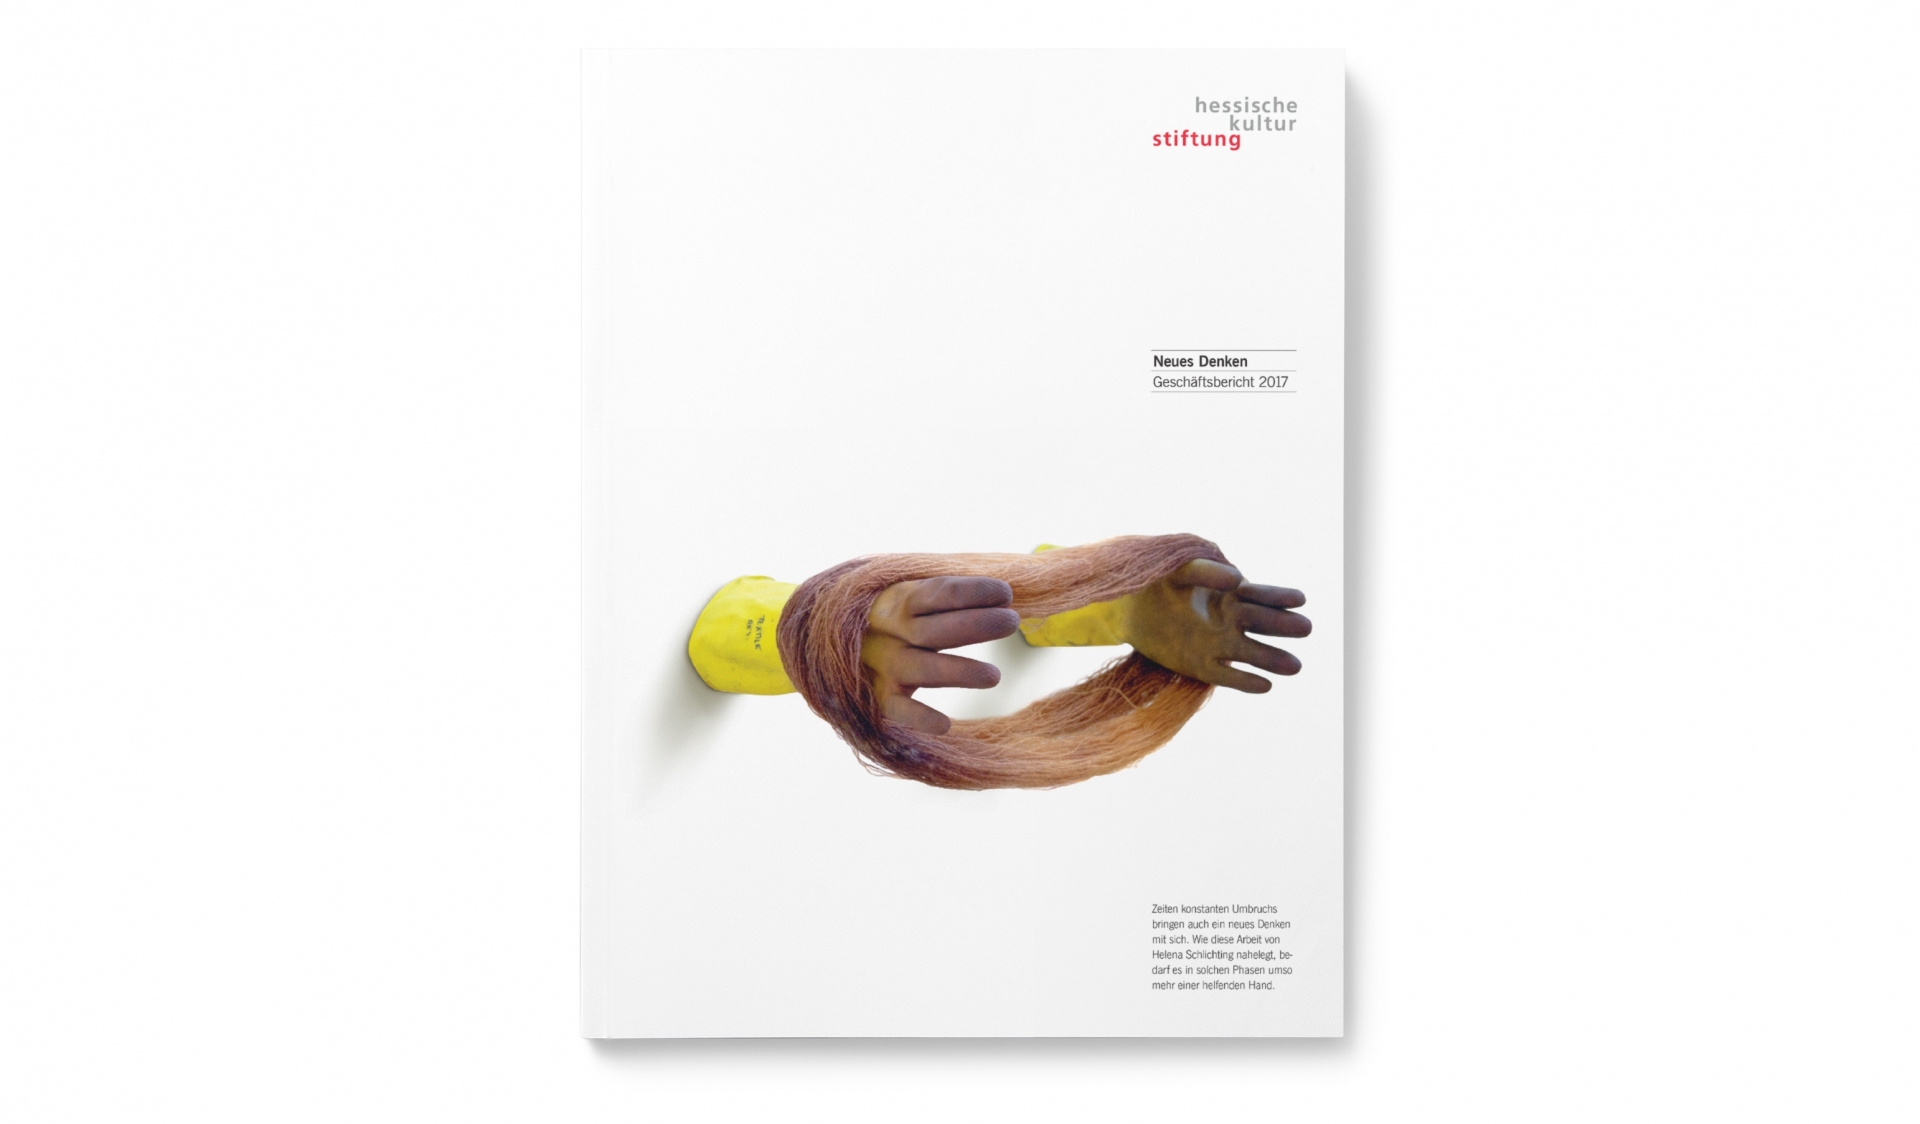 Gestaltung Geschäftsbericht 2017 Hessische Kulturstiftung - Covergestaltung